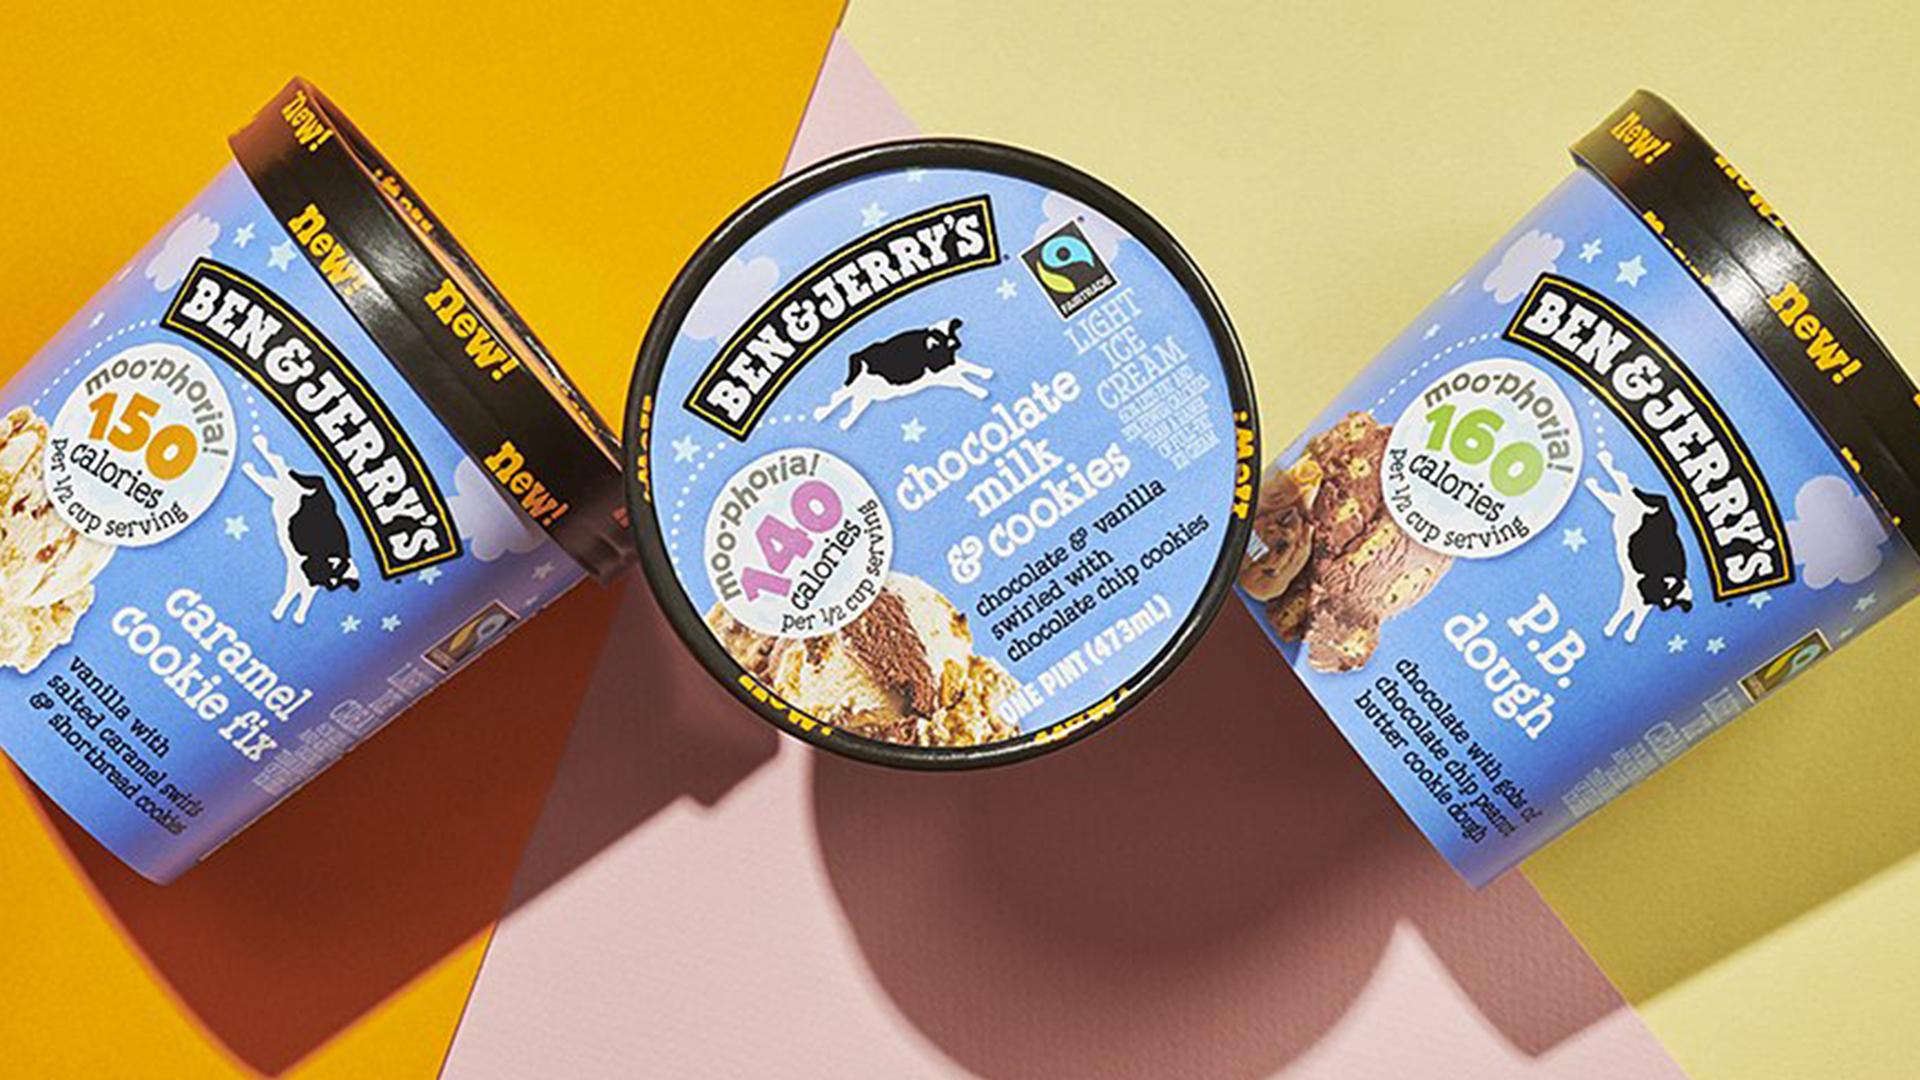 Ben & Jerry's Ice Cream Lower Calorie 'Moophoria' Flavors